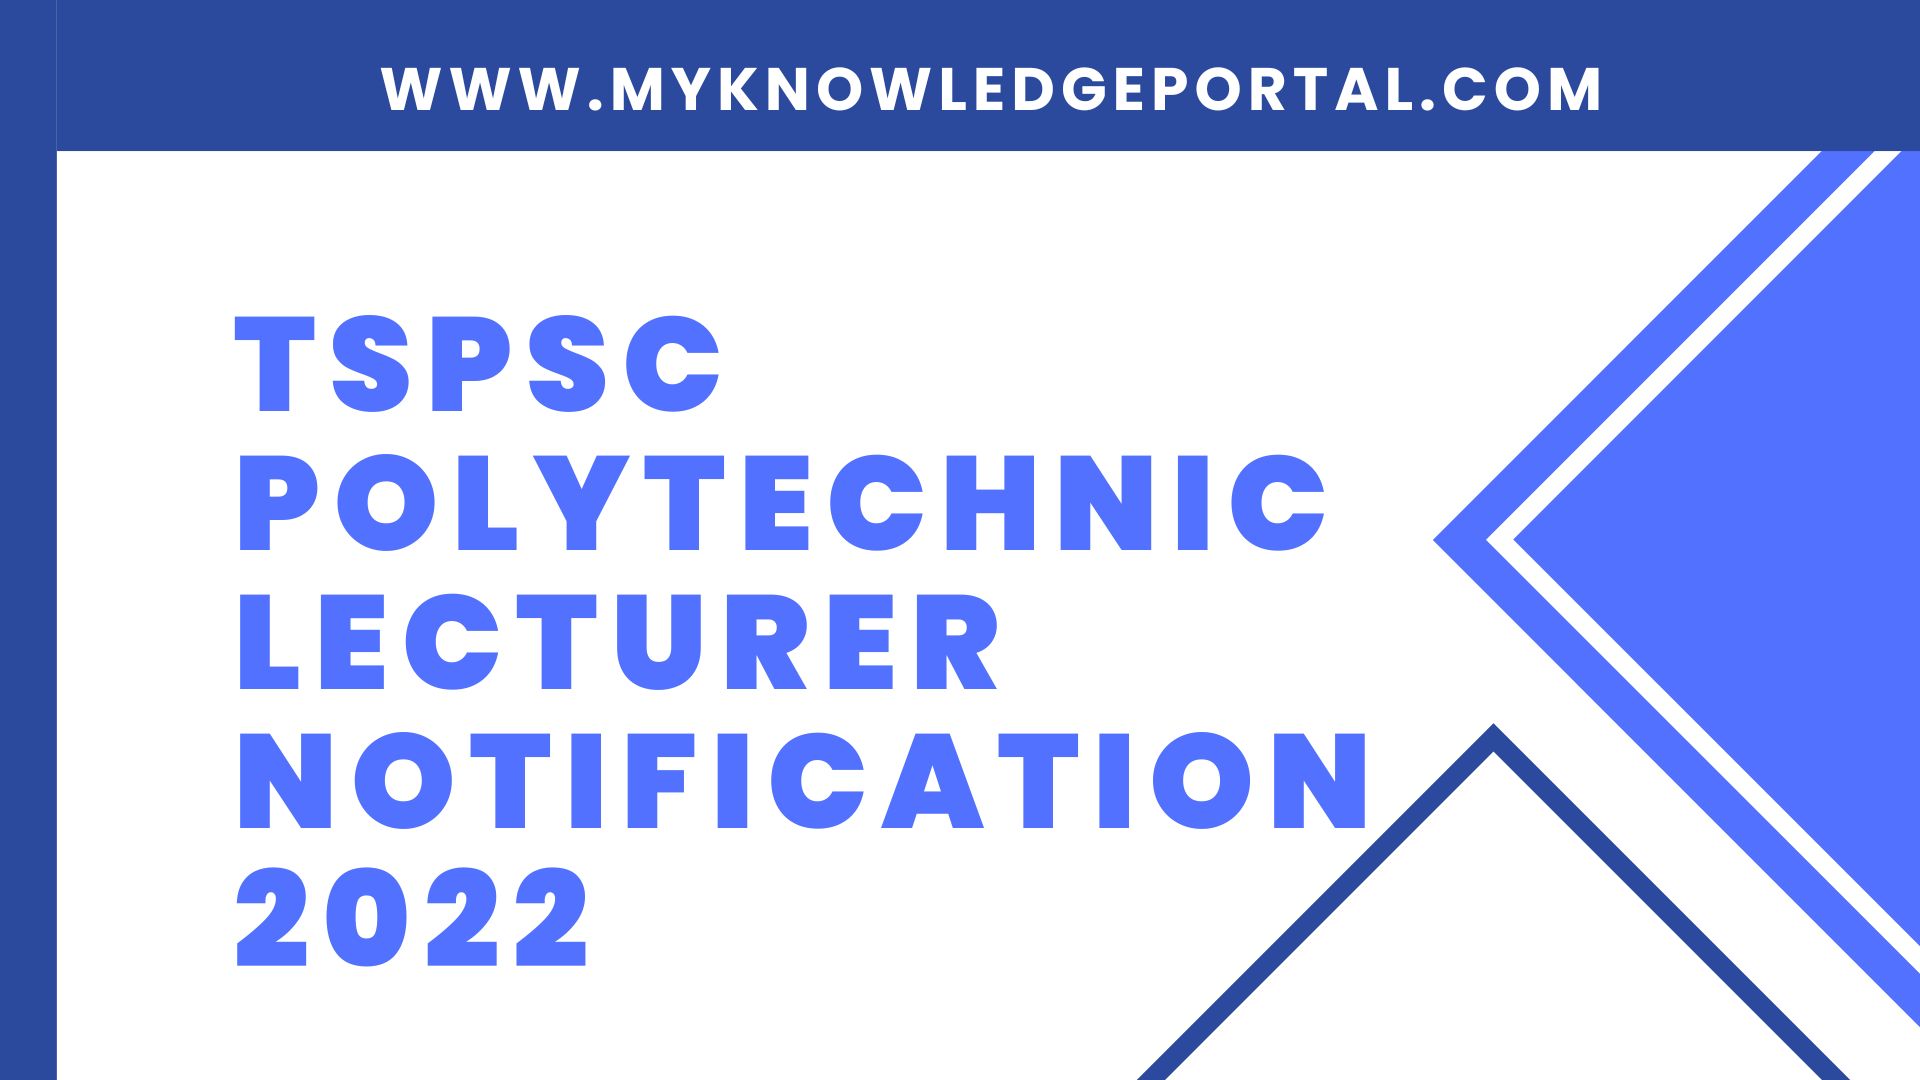 TSPSC Polytechnic Lecturer Notification 2022